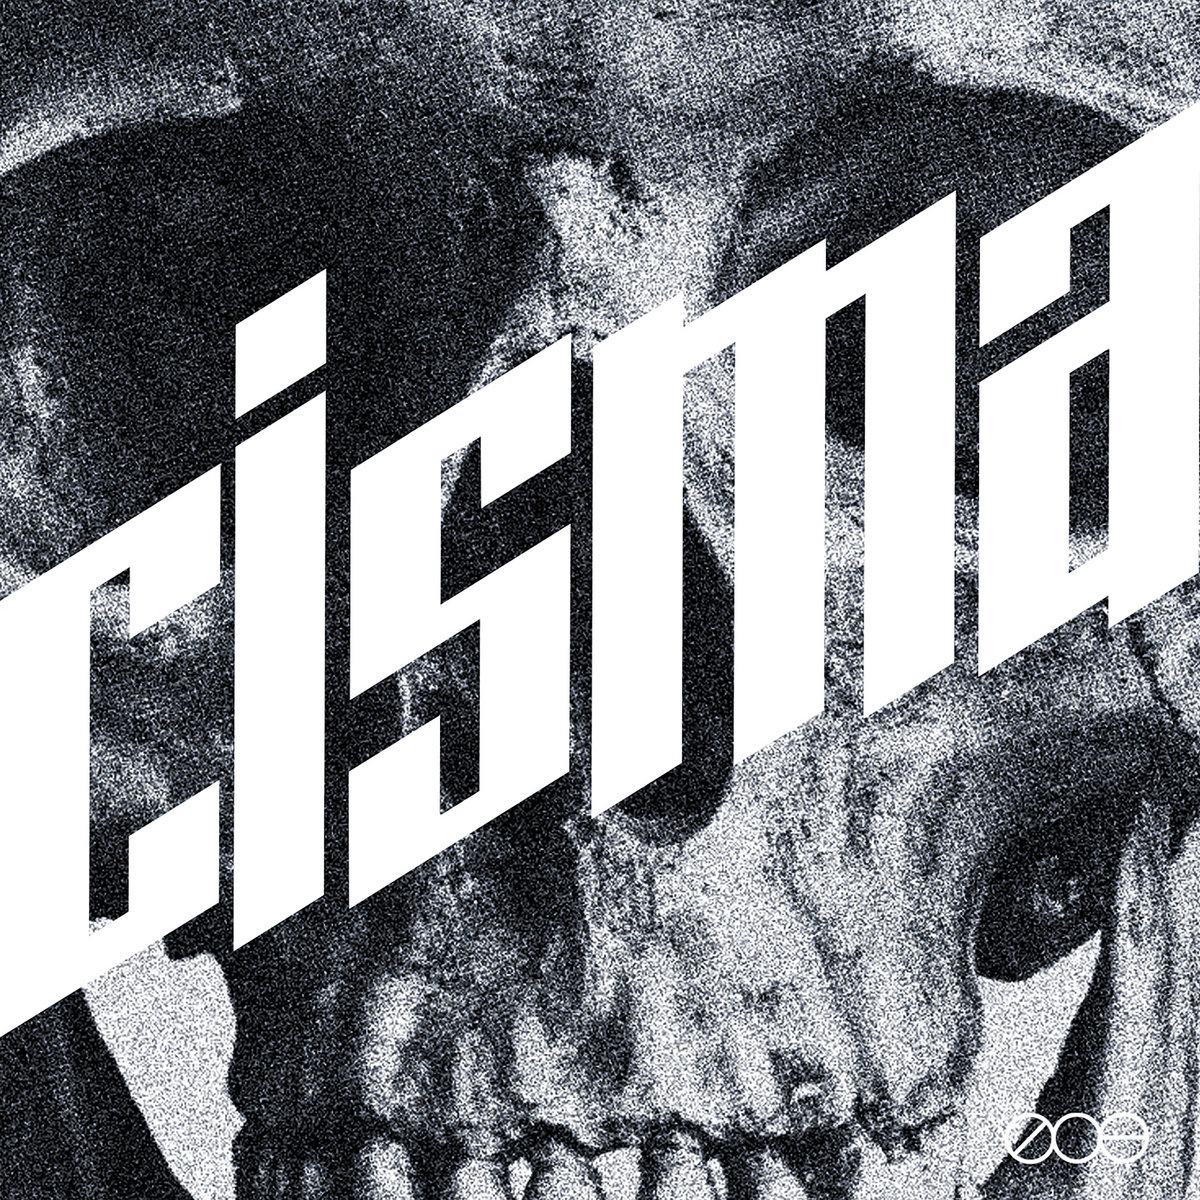 ZOE - Cisma cover 